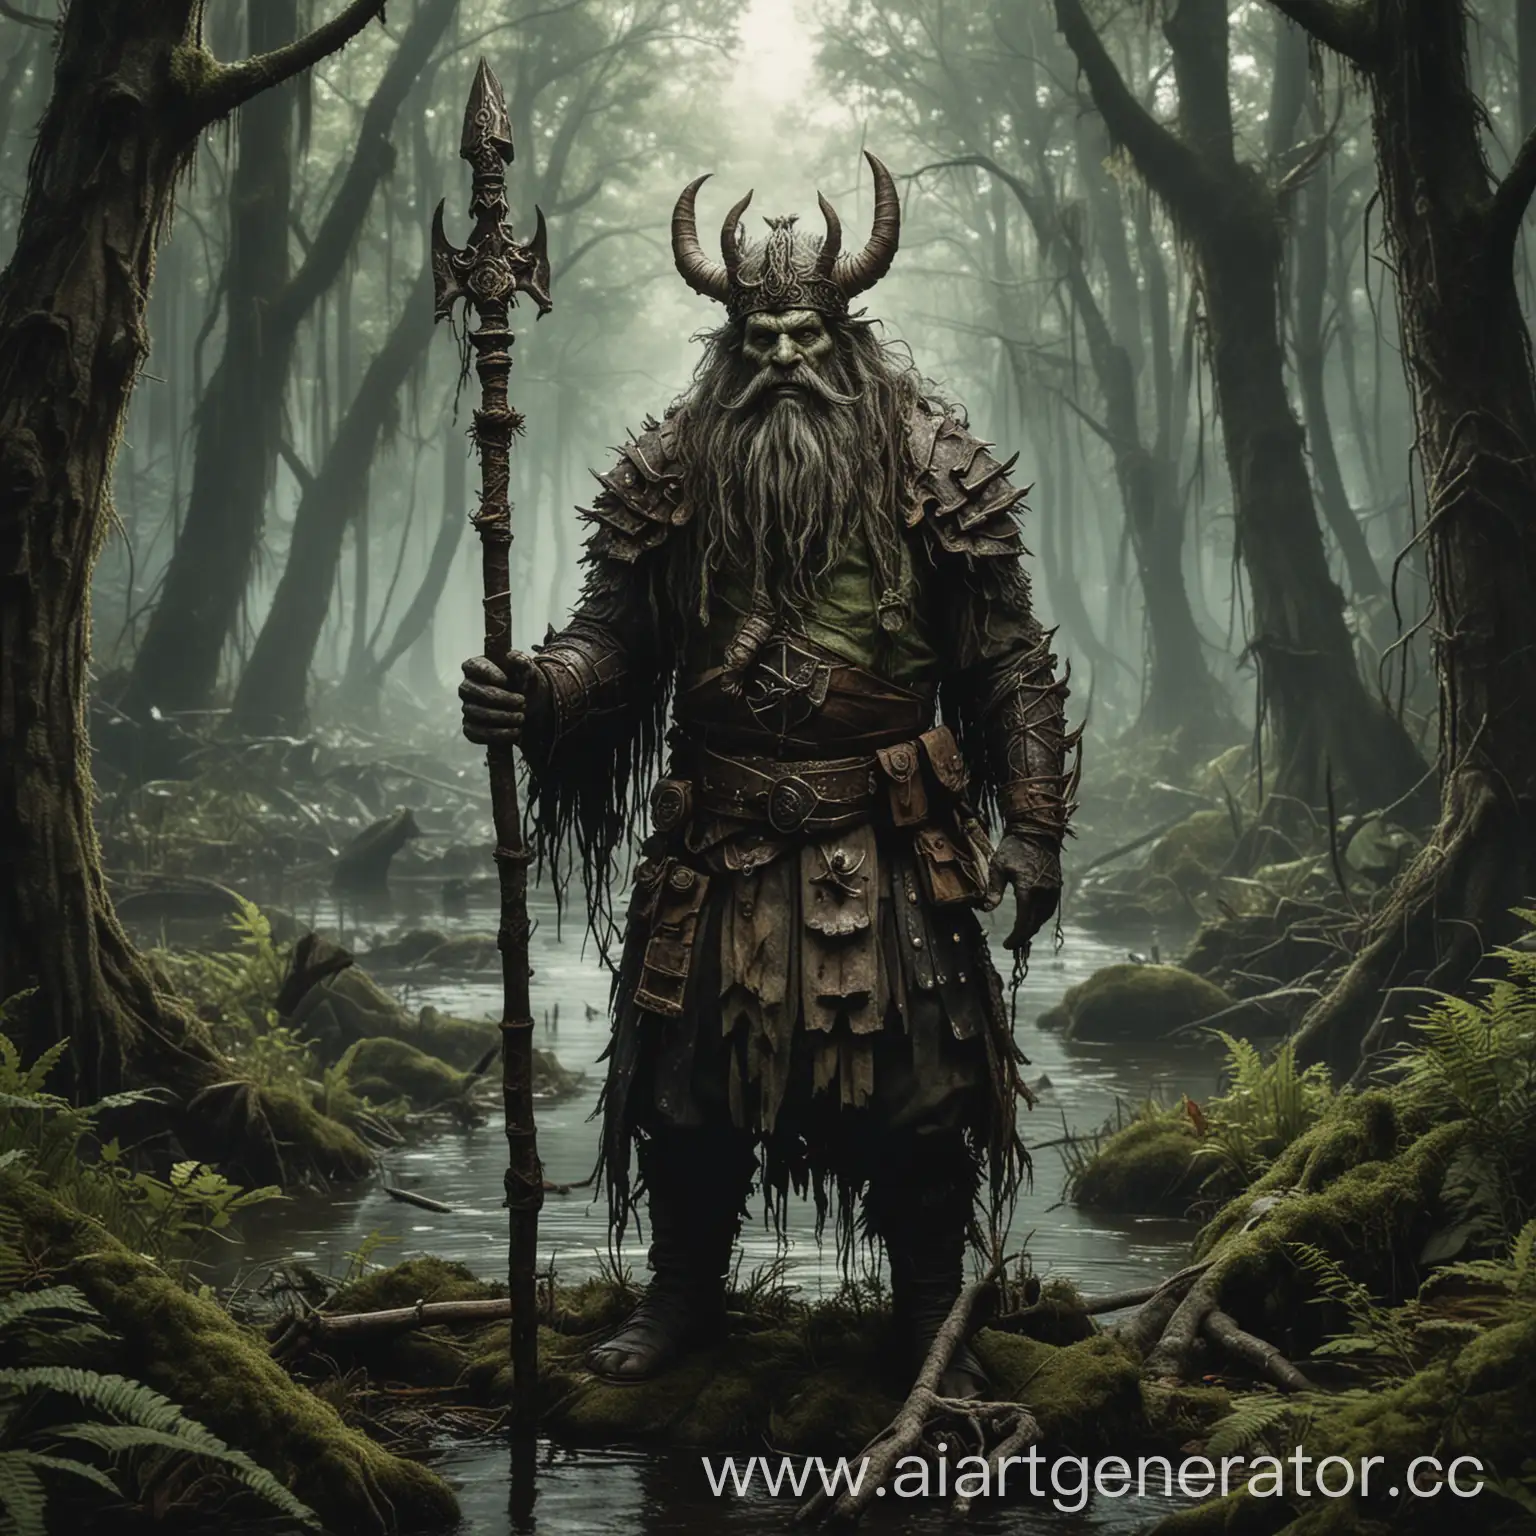 Swamp king guard of deaf forest